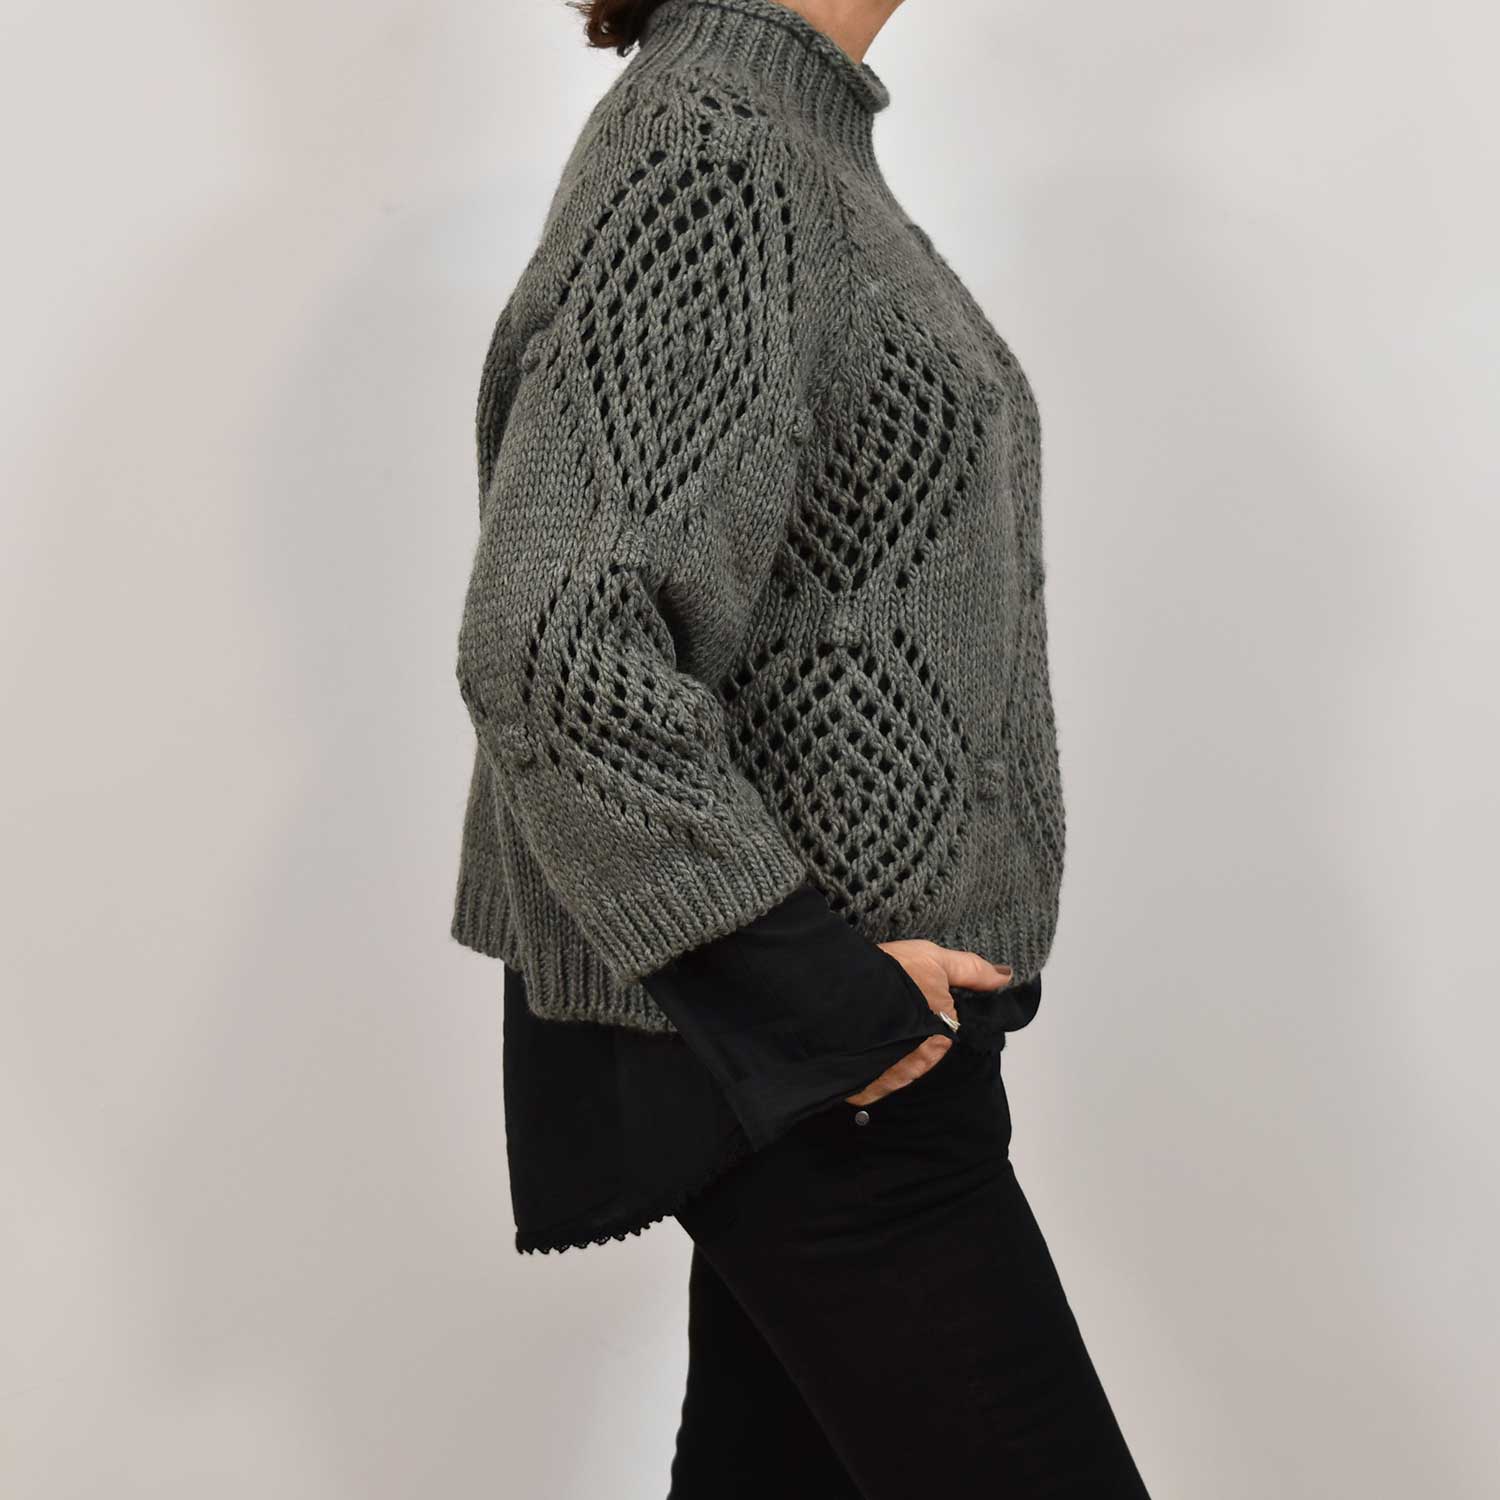 Kaki structured knit sweater